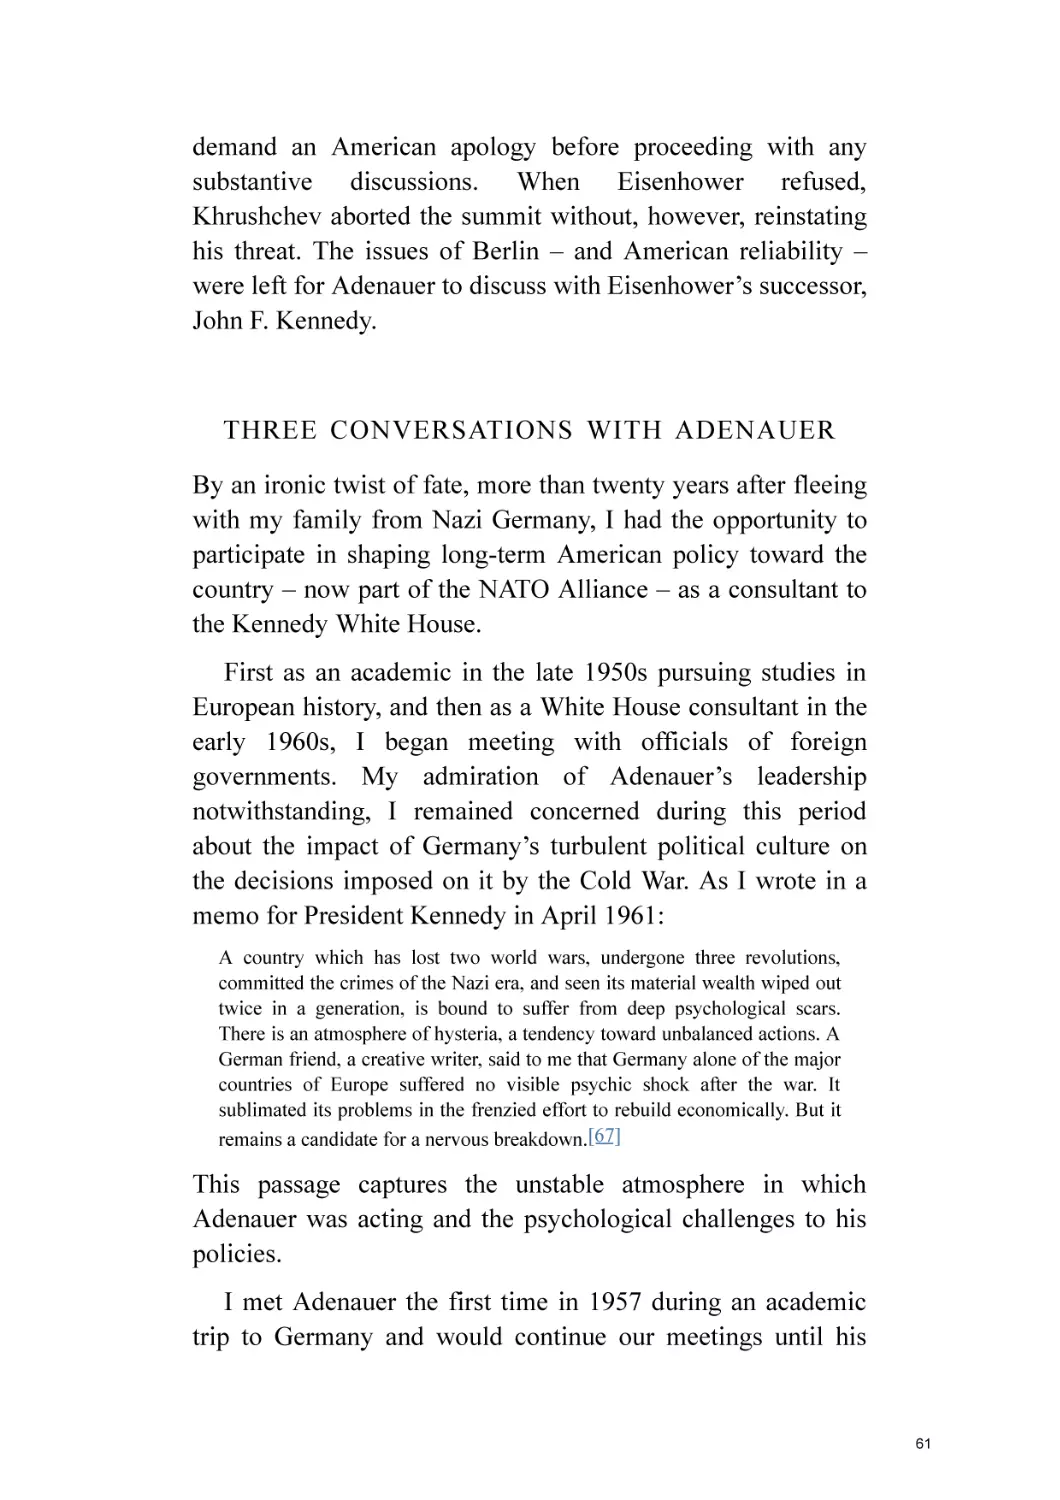 Three Conversations with Adenauer